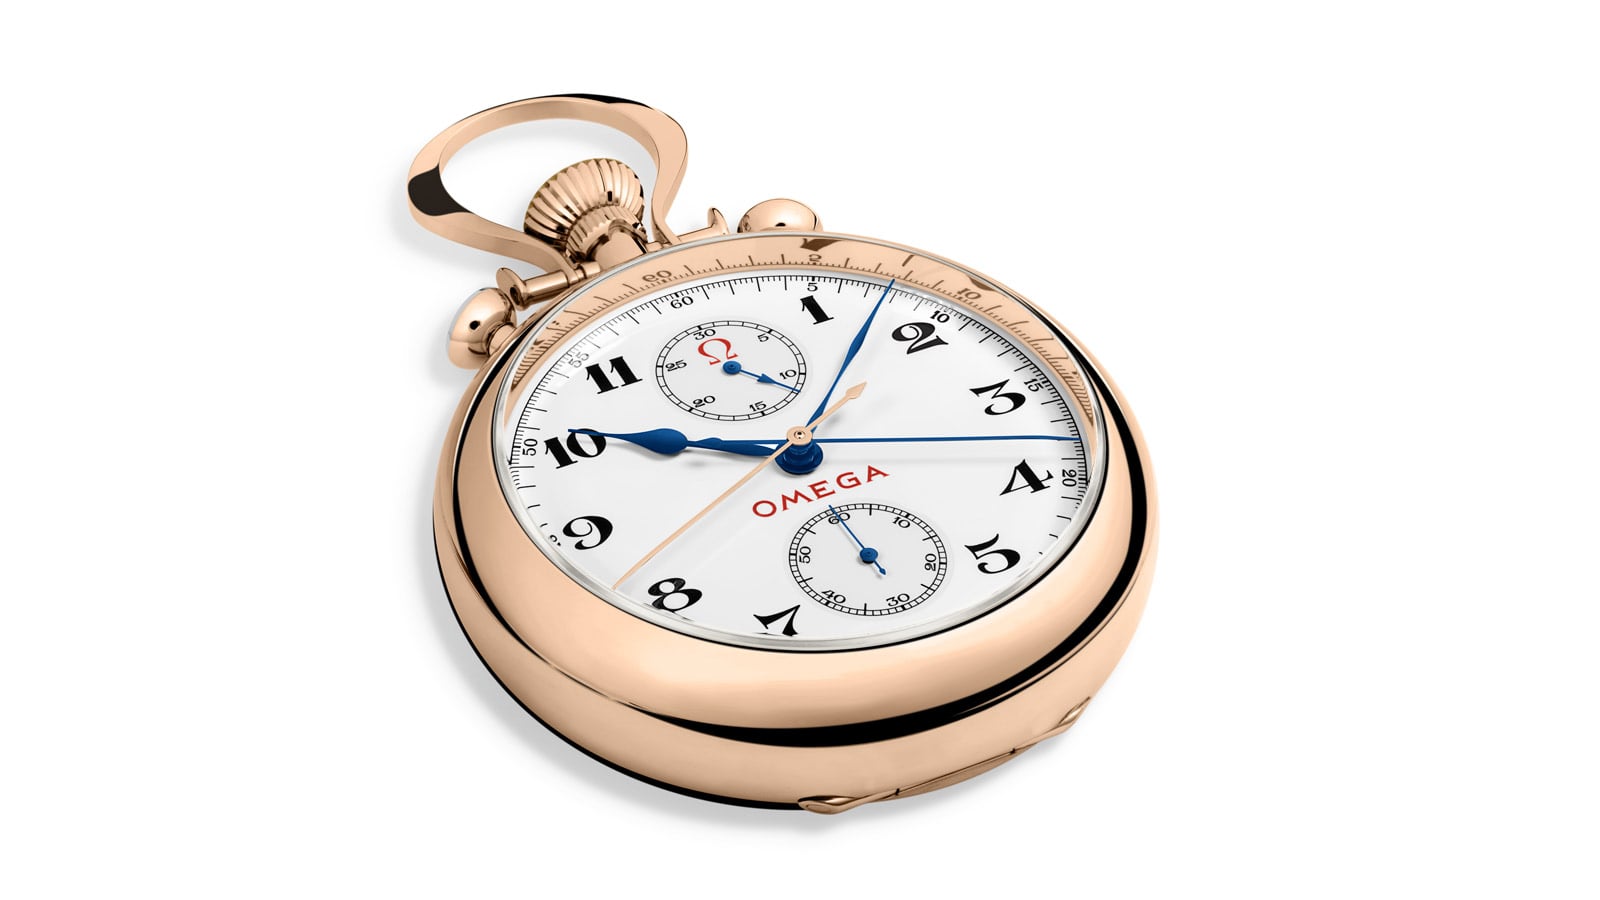 Omega Seamaster Diver 300 M professional chronometer.